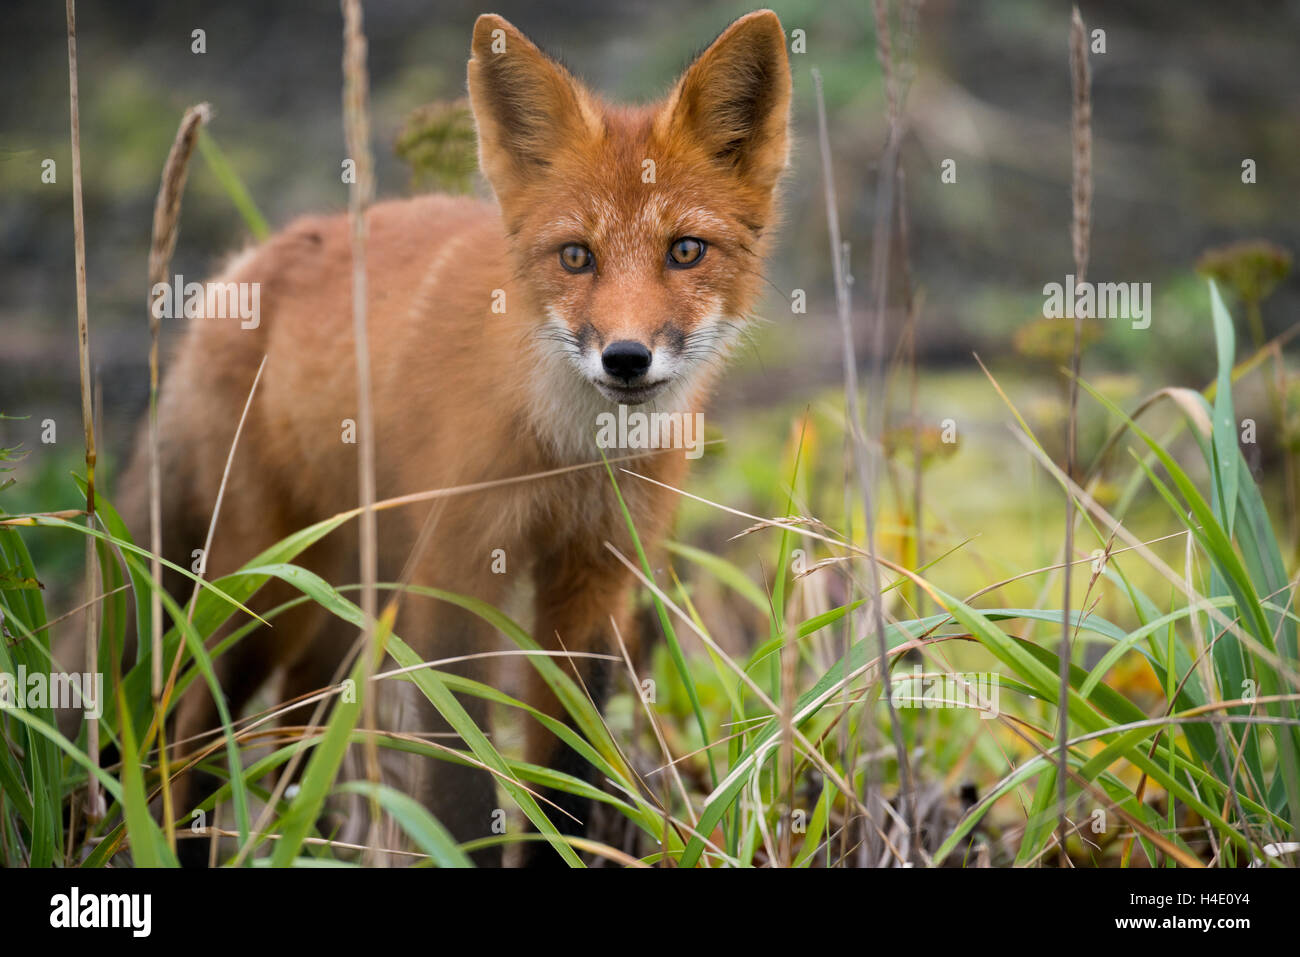 Russia, Russian Far East, Kamchatka Peninsula, Kuril Islands, Atlasova Island. Wild red fox in tall summer grass. Stock Photo